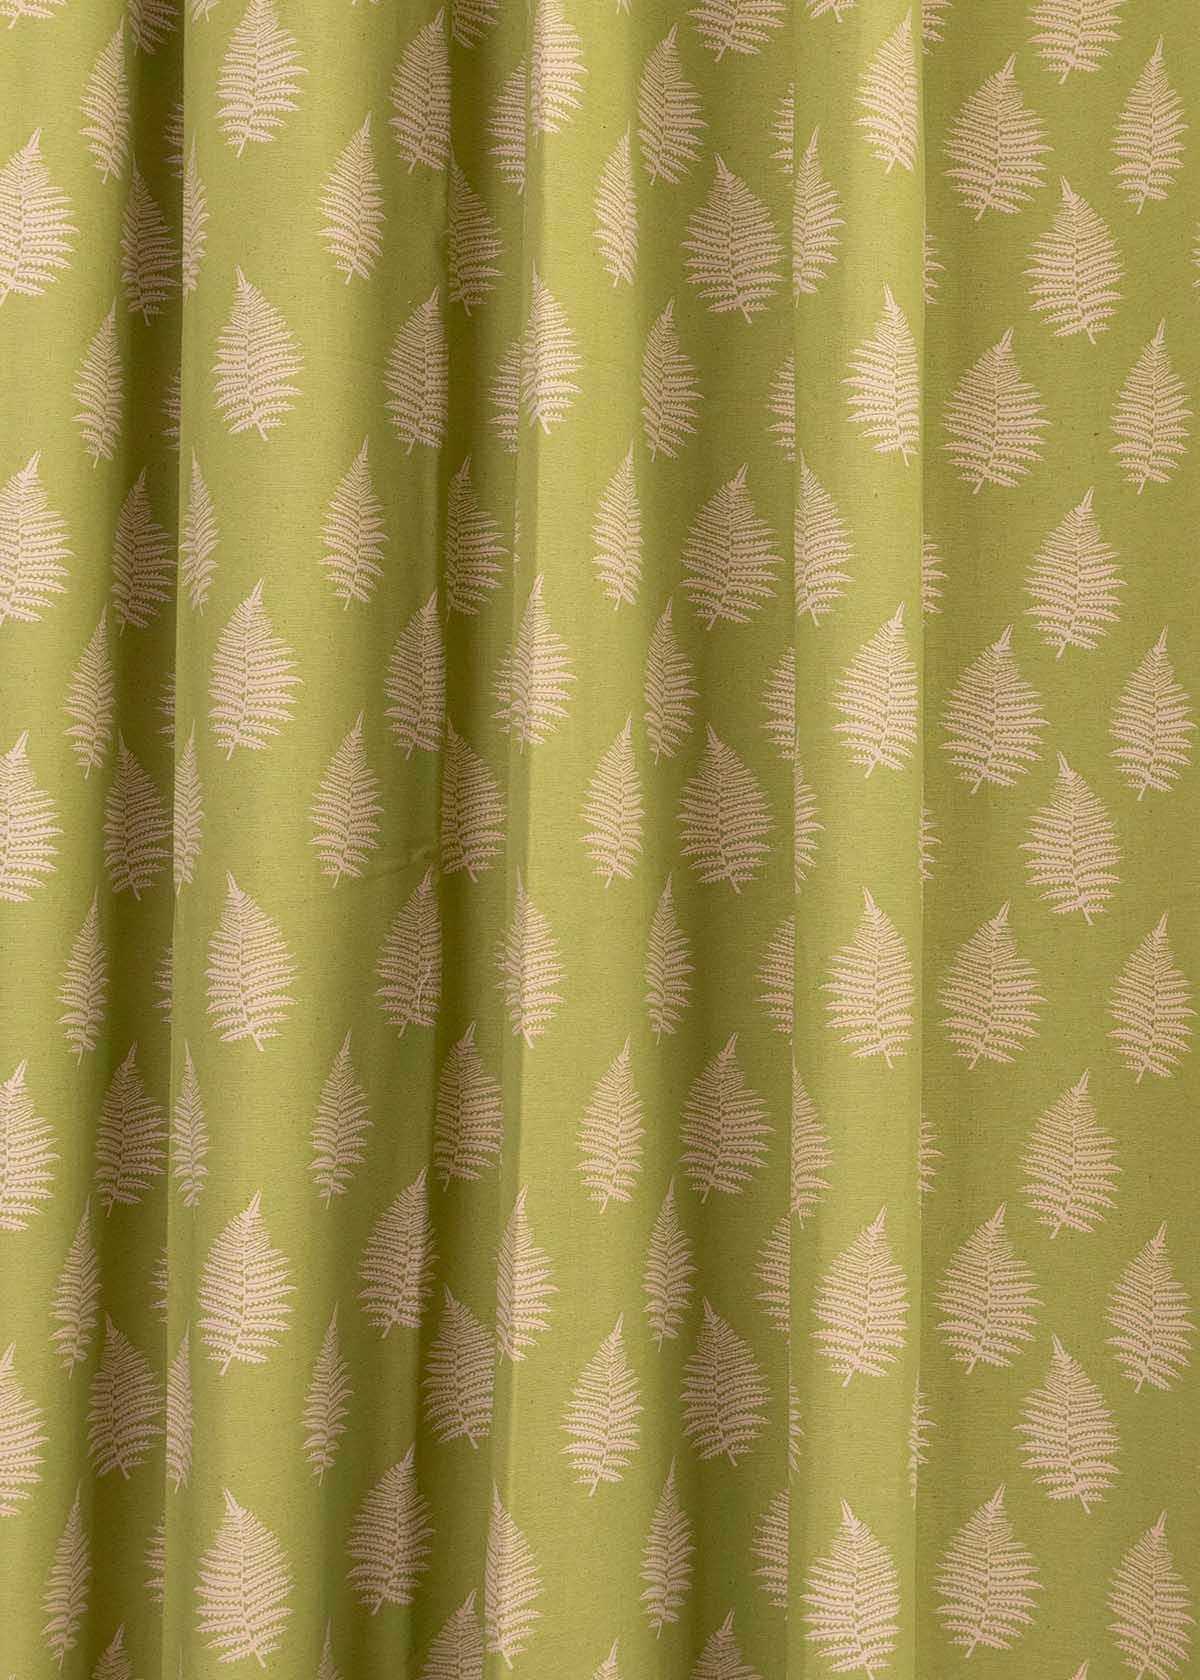 Ferns Printed Cotton Curtain - Green